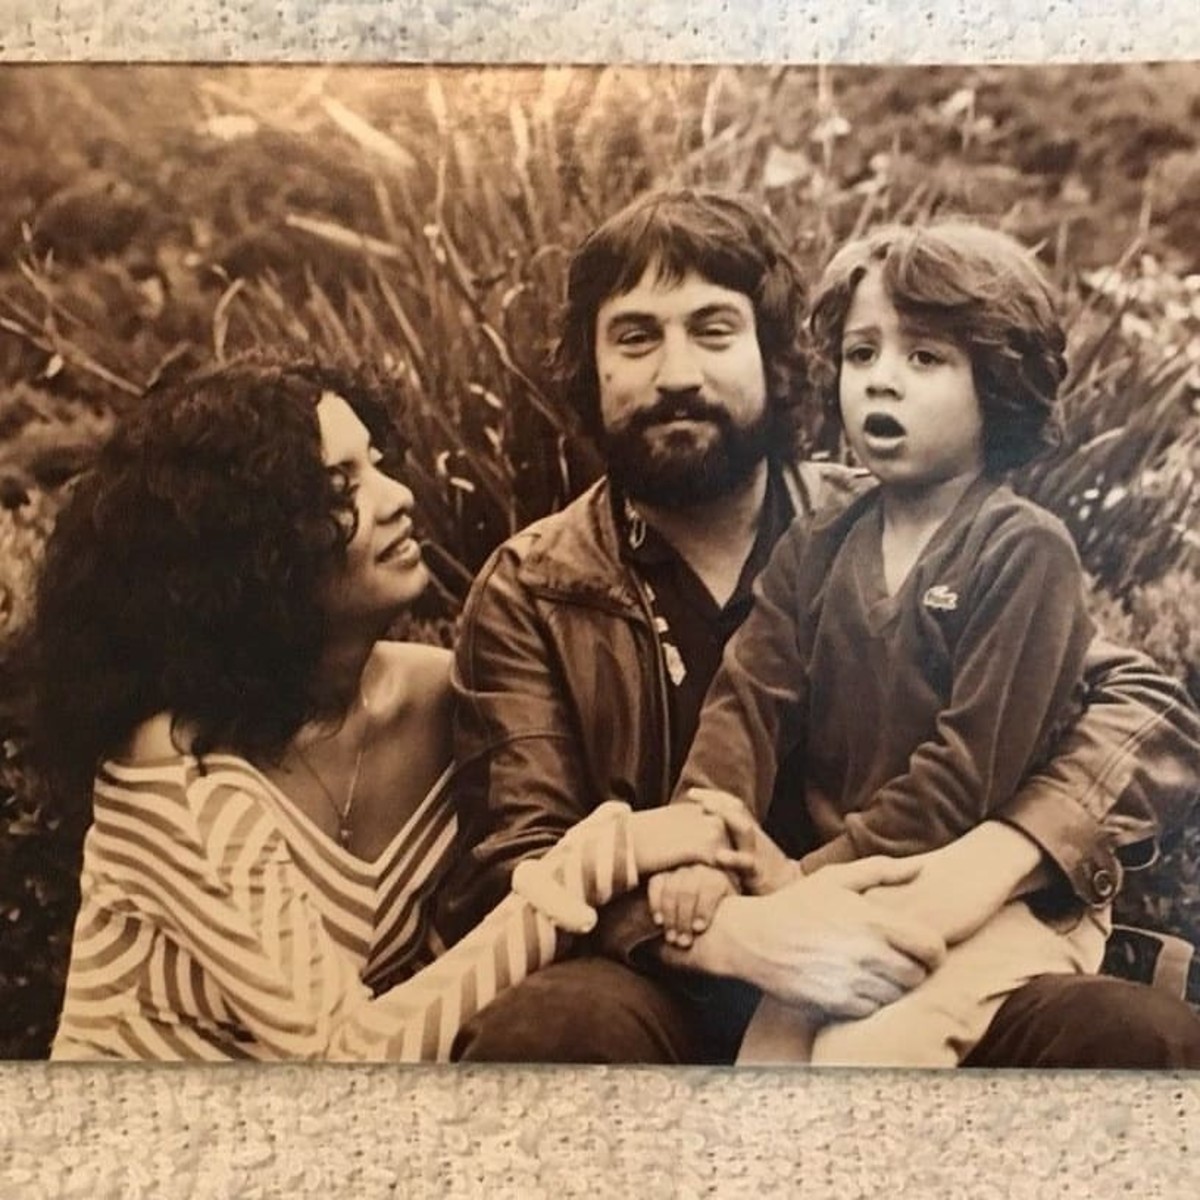 Diahanne Abbott, Robert De Niro & their son, Raphael